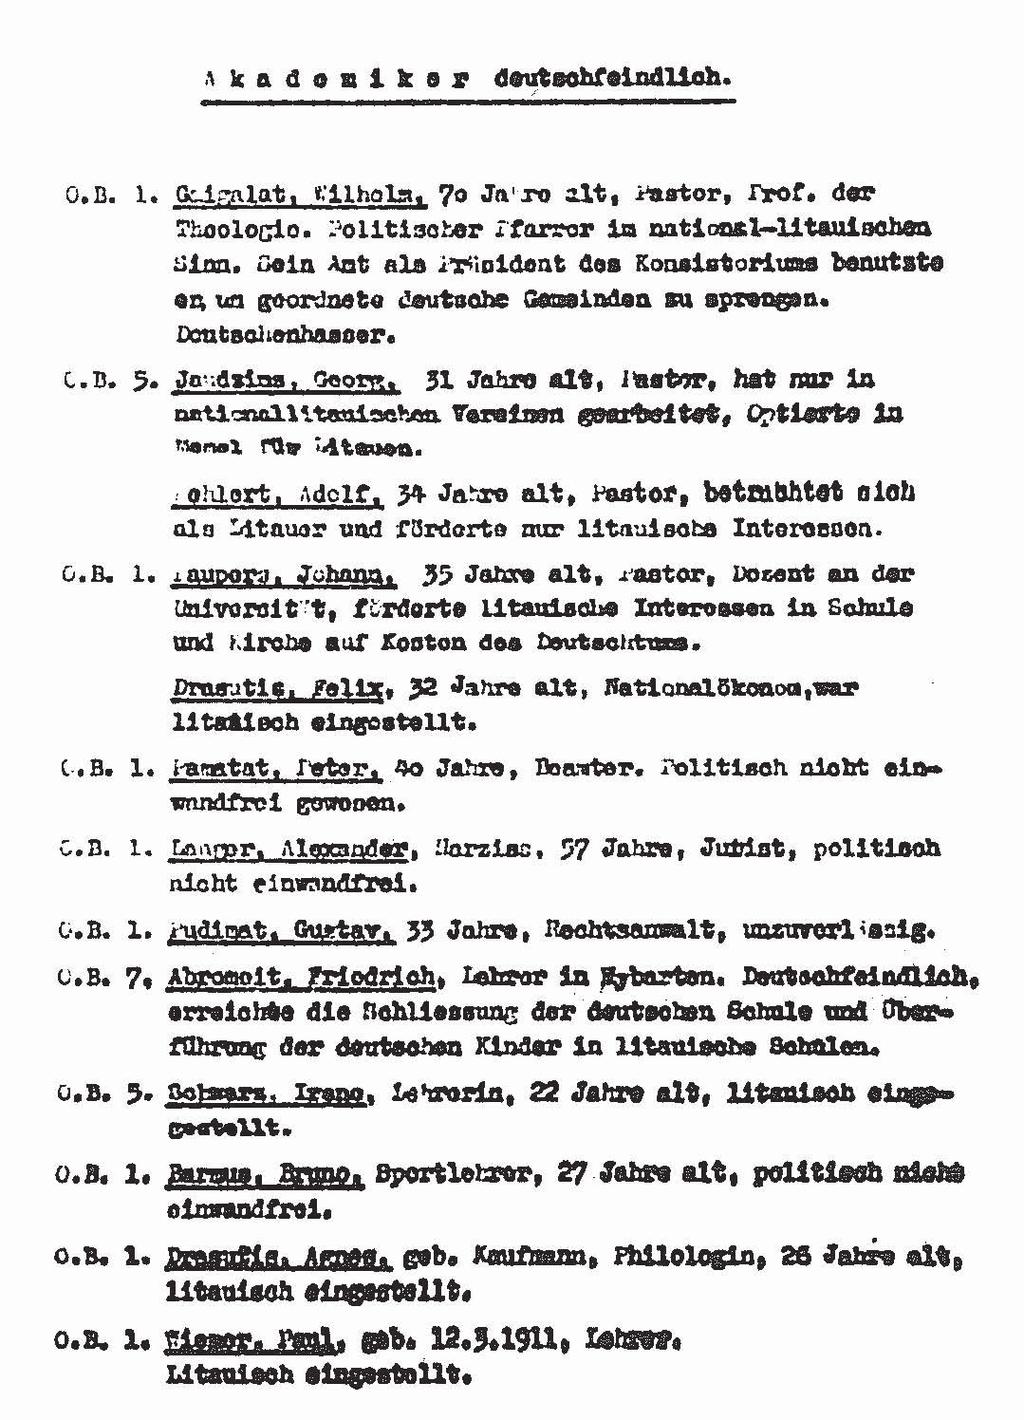 2. the soviet occupation List of high ranking repatriates